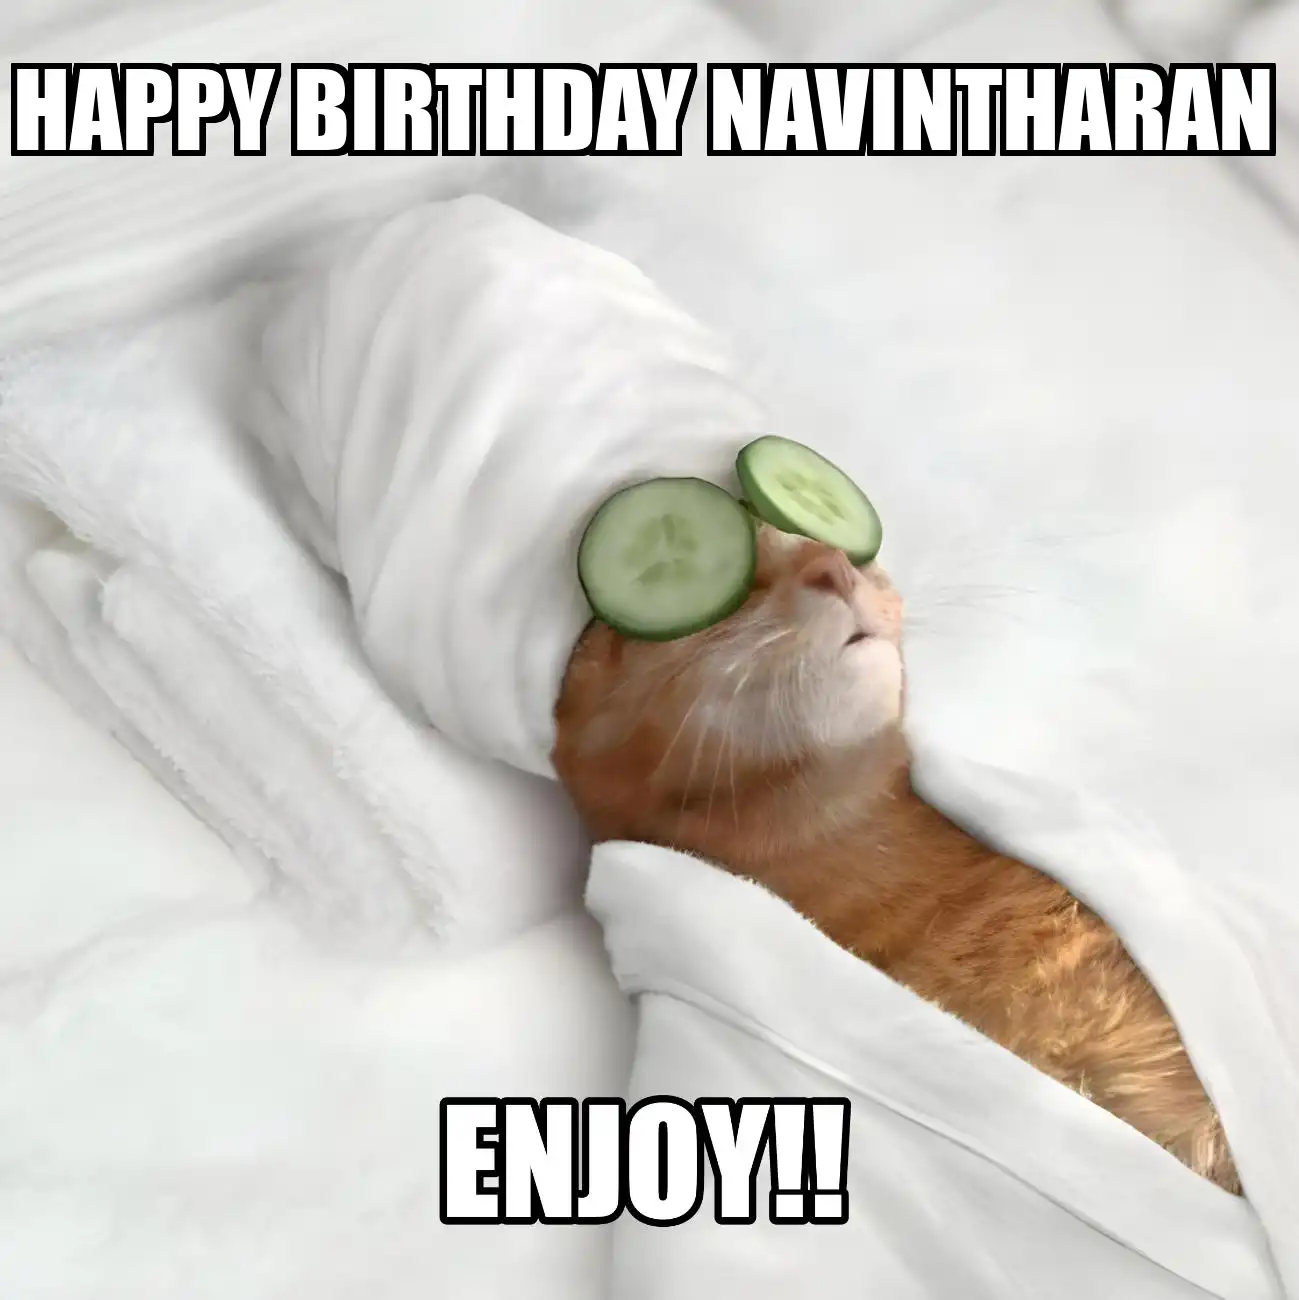 Happy Birthday Navintharan Enjoy Cat Meme